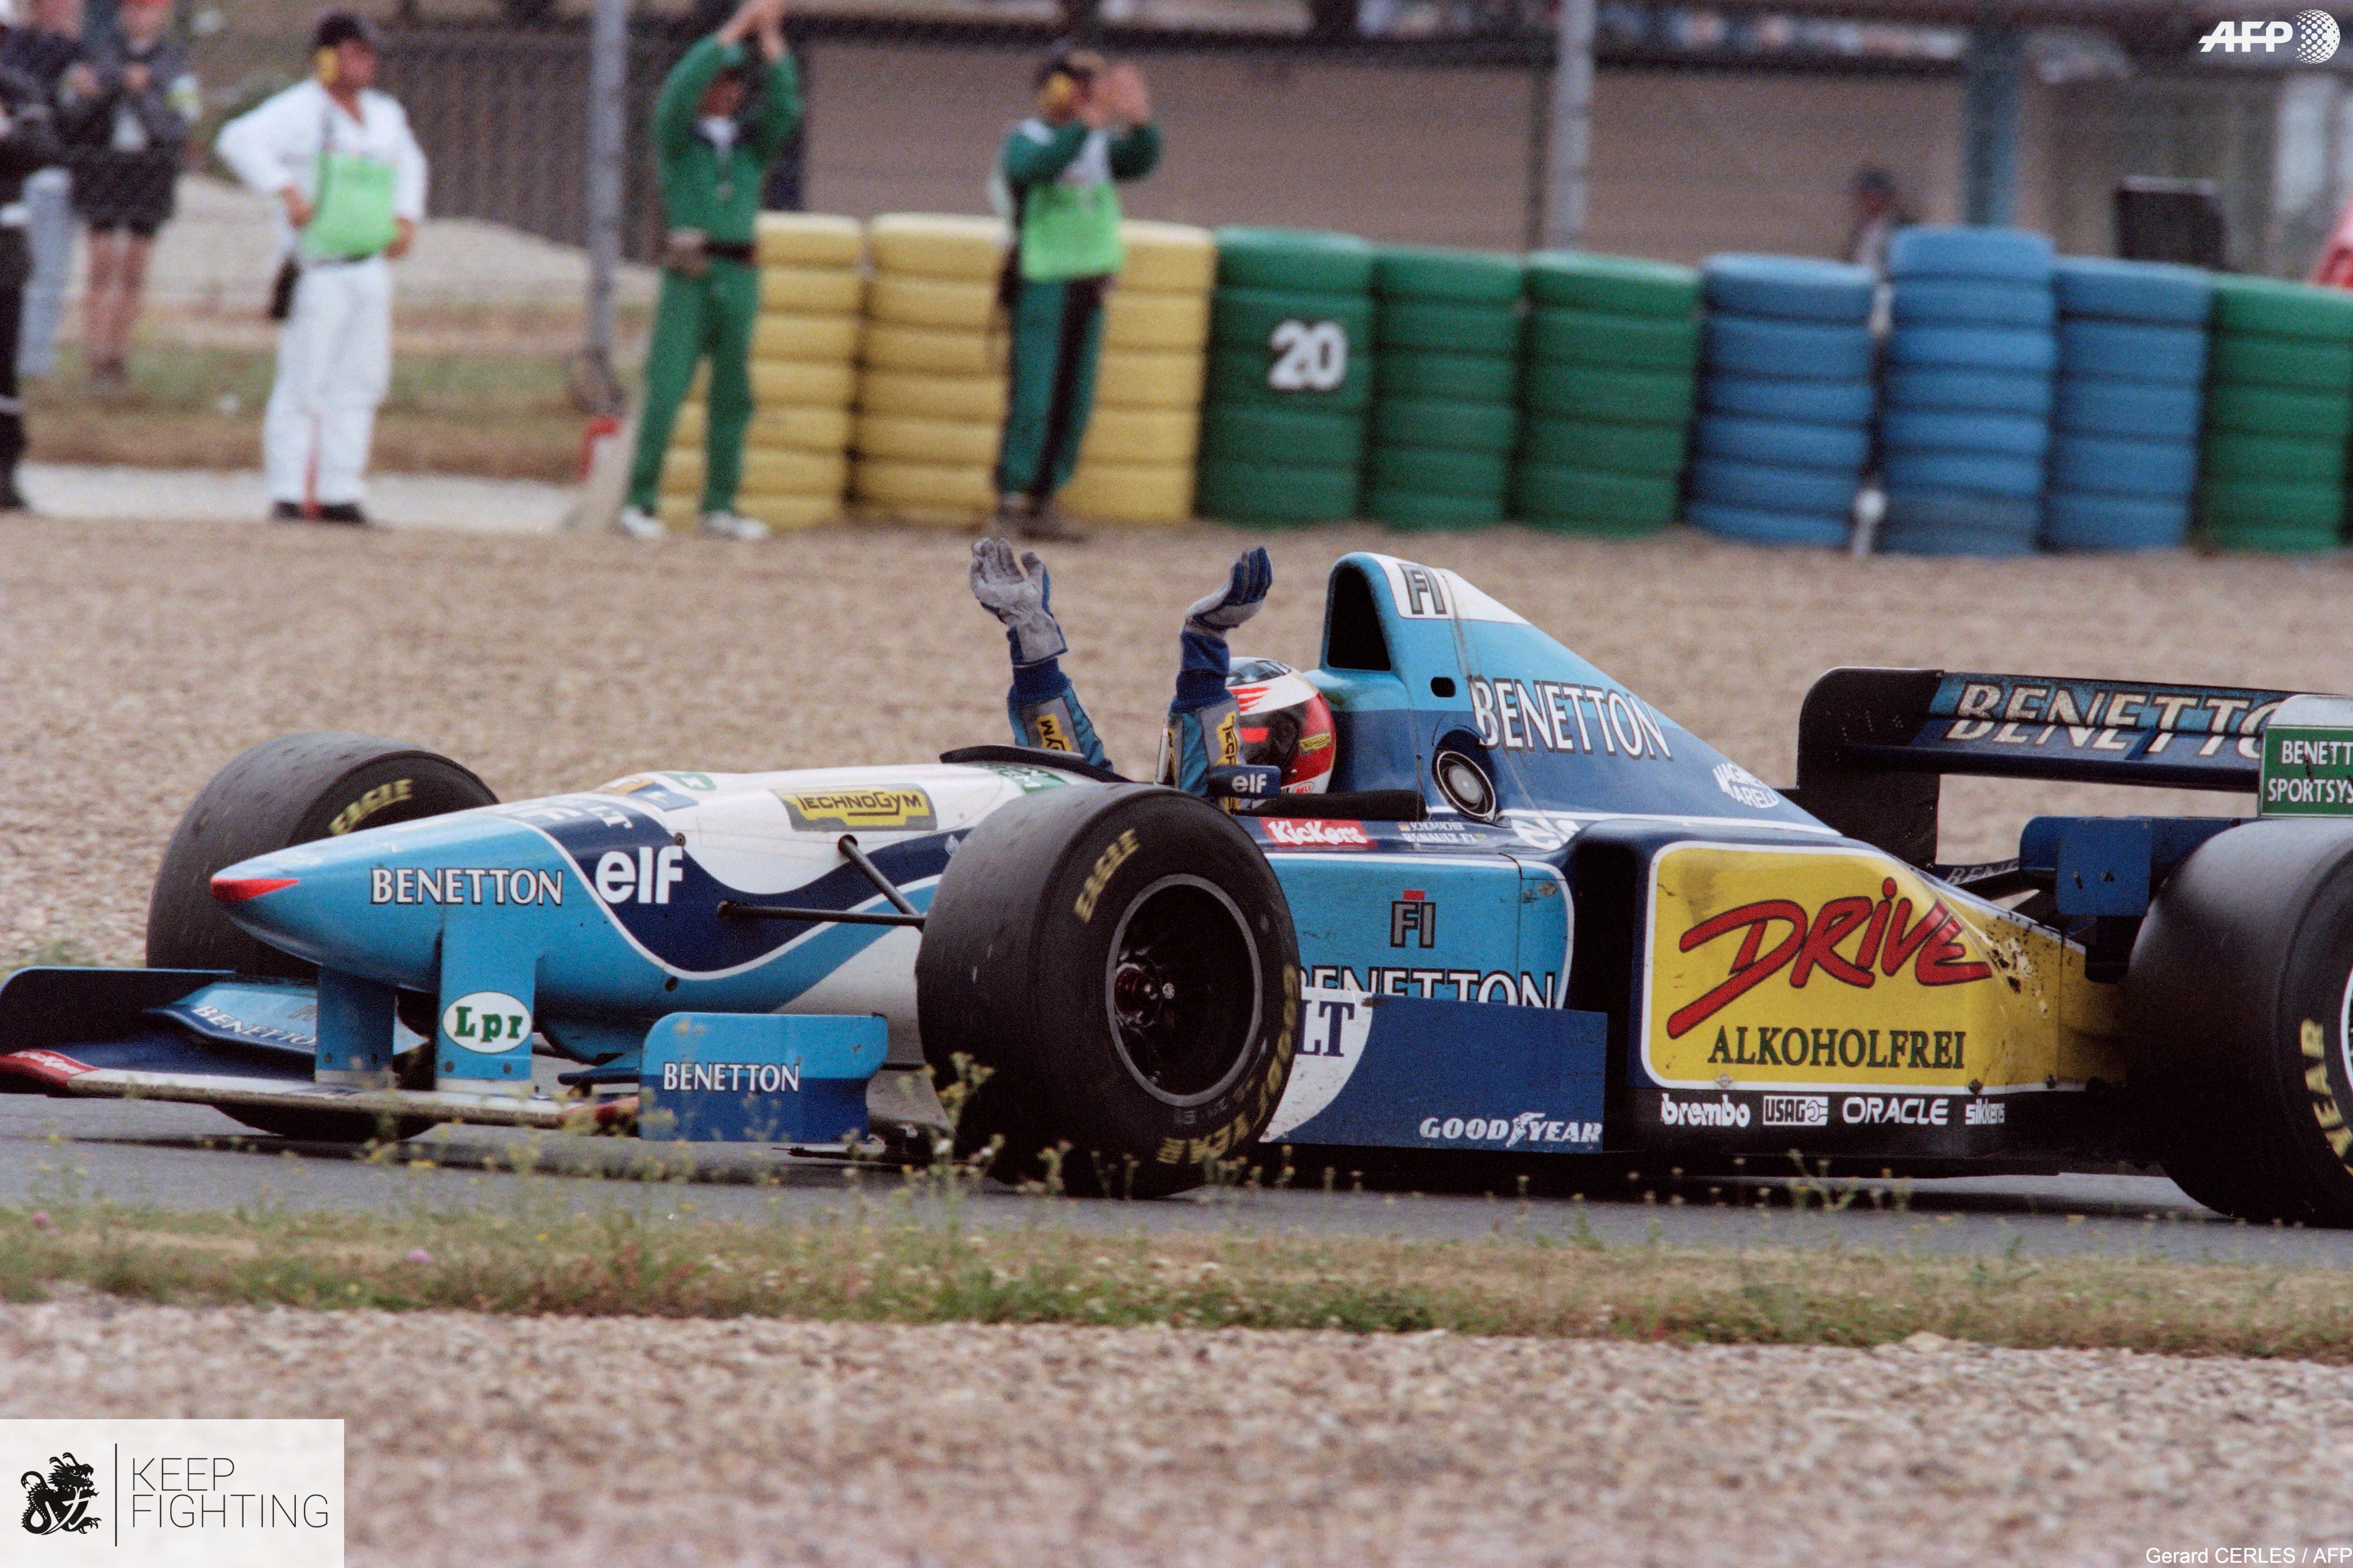 File:French GP 1995 winner's trophy 2019 Michael Schumacher